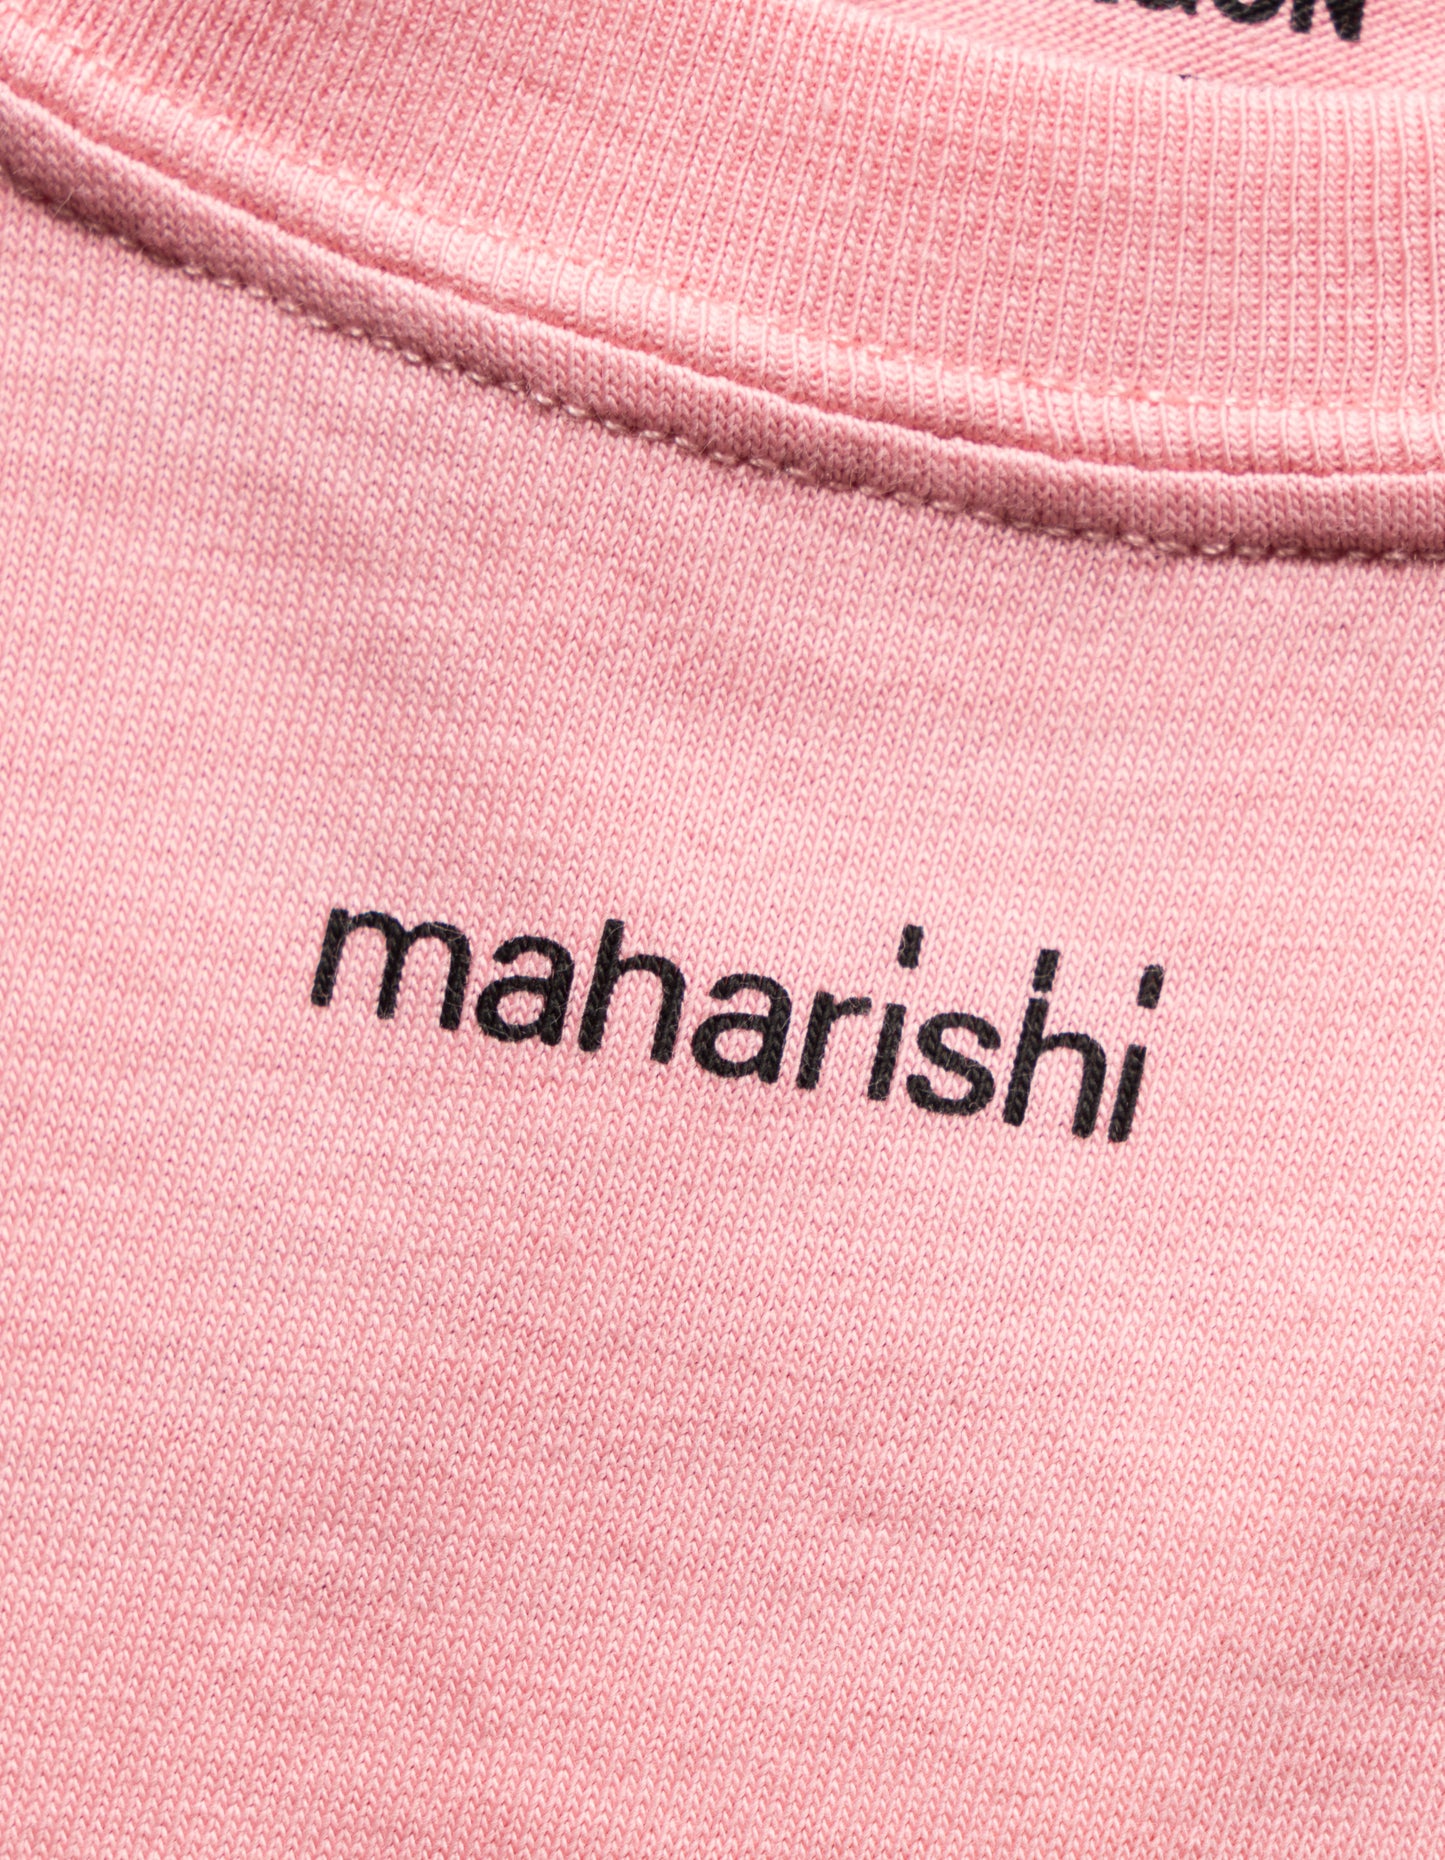 1307 Micro Maharishi T-Shirt Flag Pink